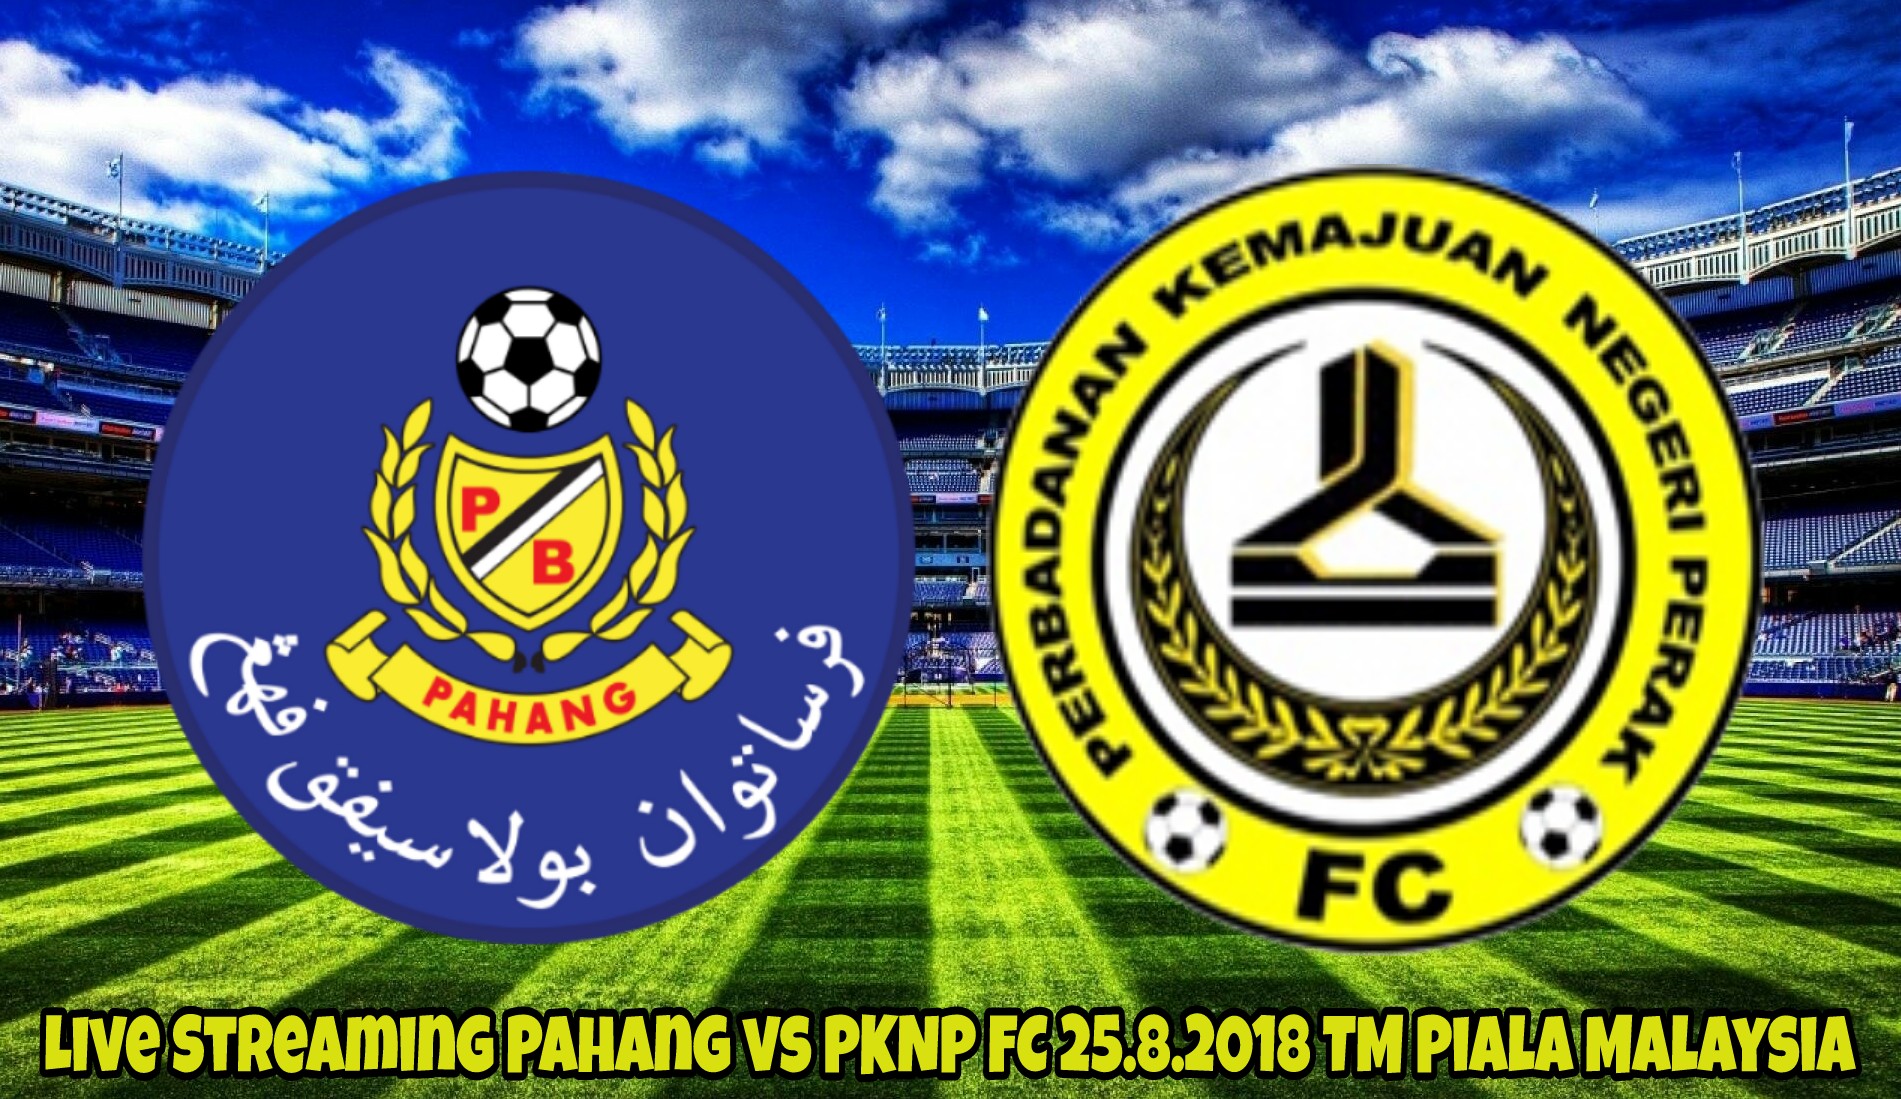 Live Streaming Pahang vs PKNP FC 25.8.2018 TM Piala Malaysia